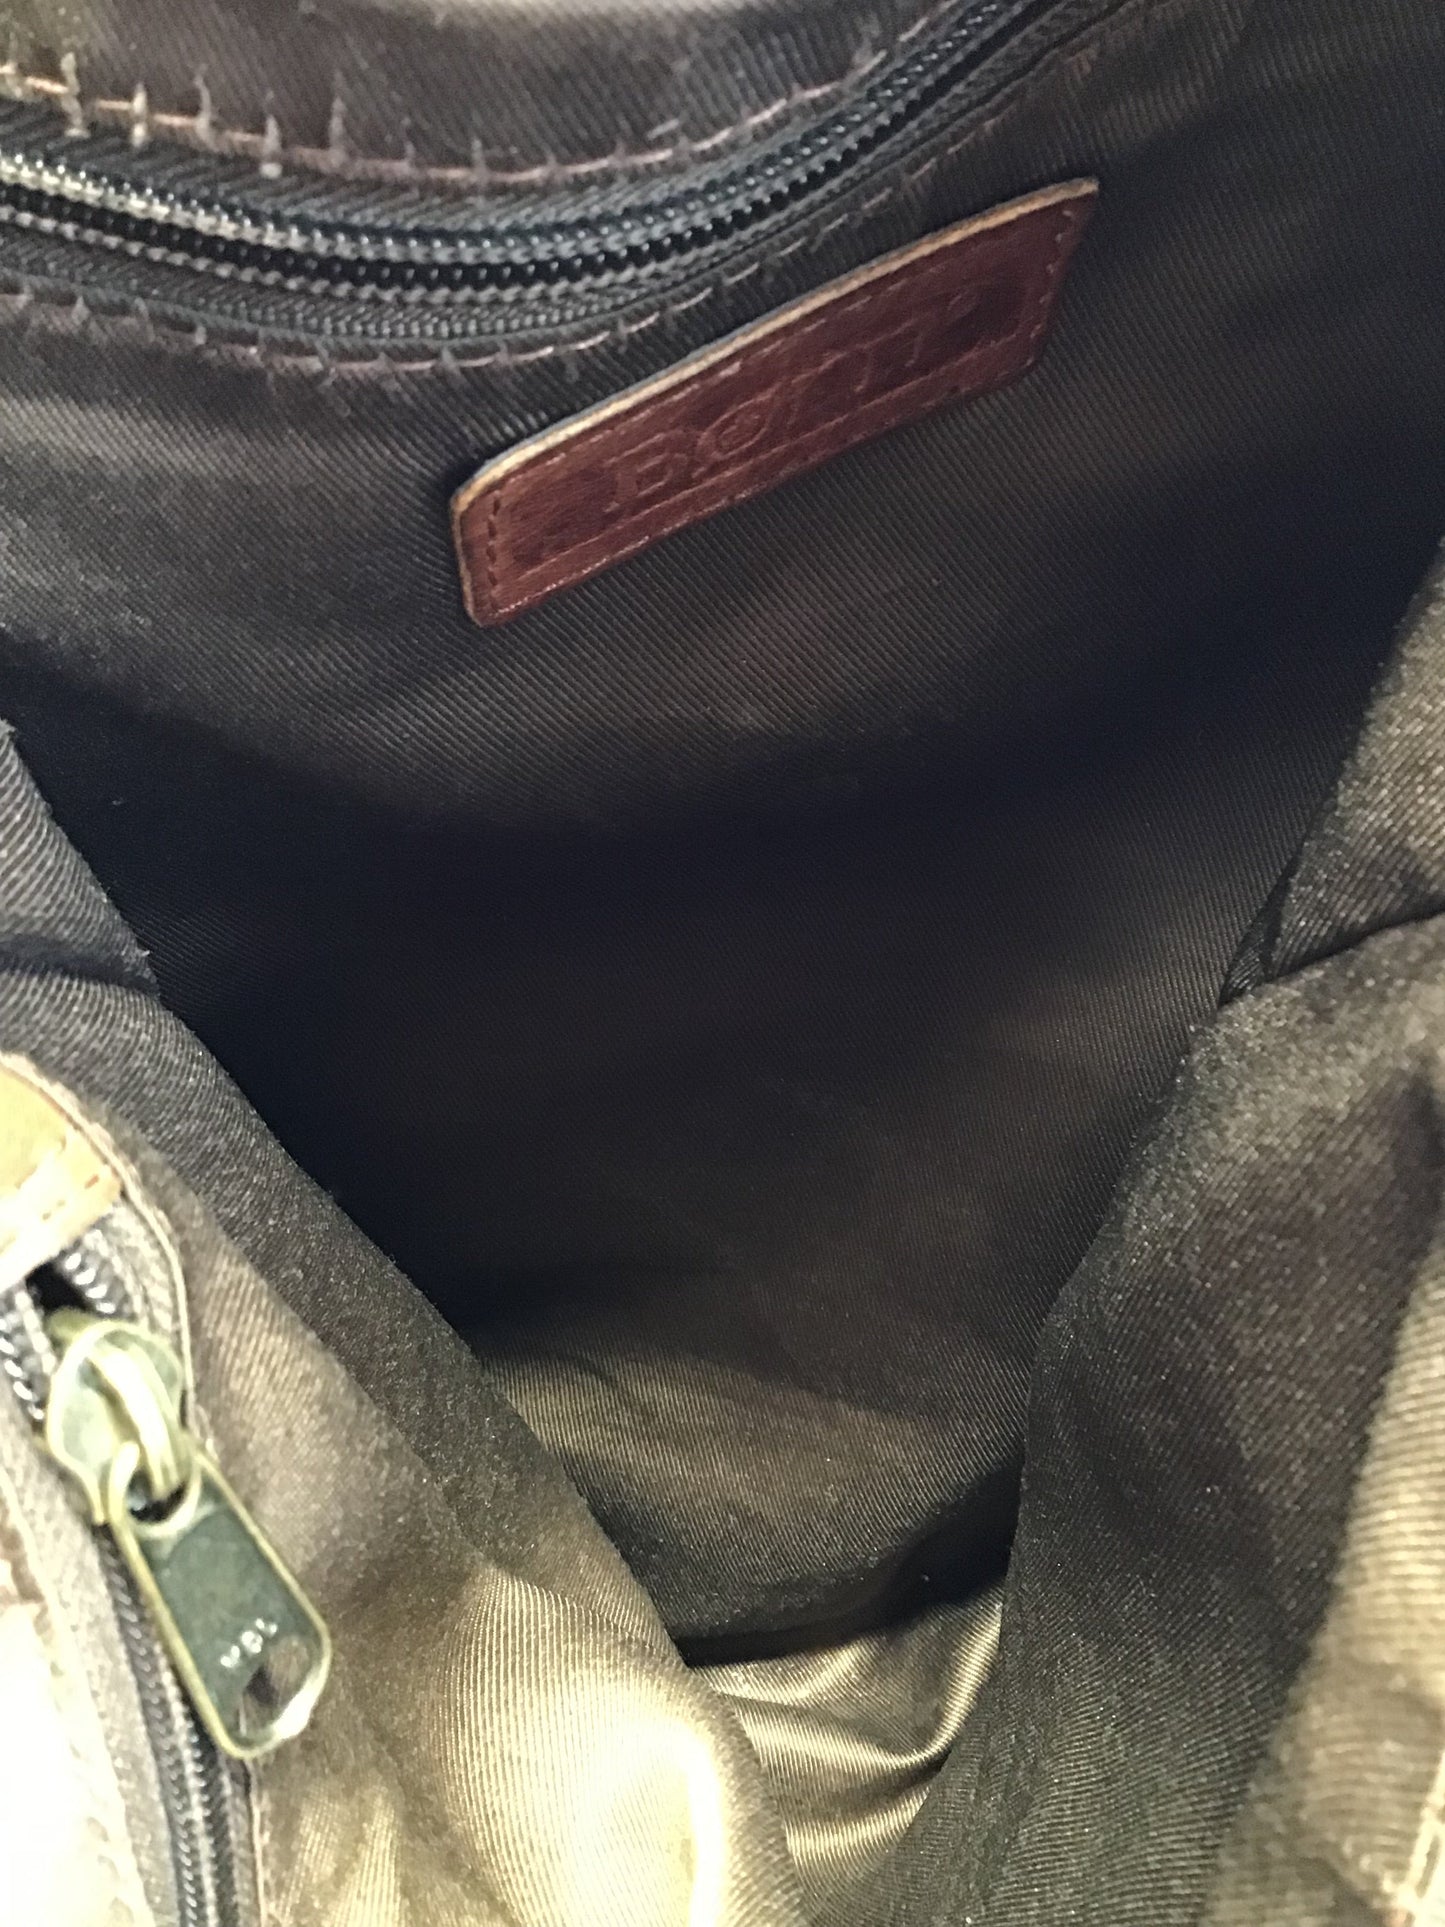 Handbag By Born  Size: Medium